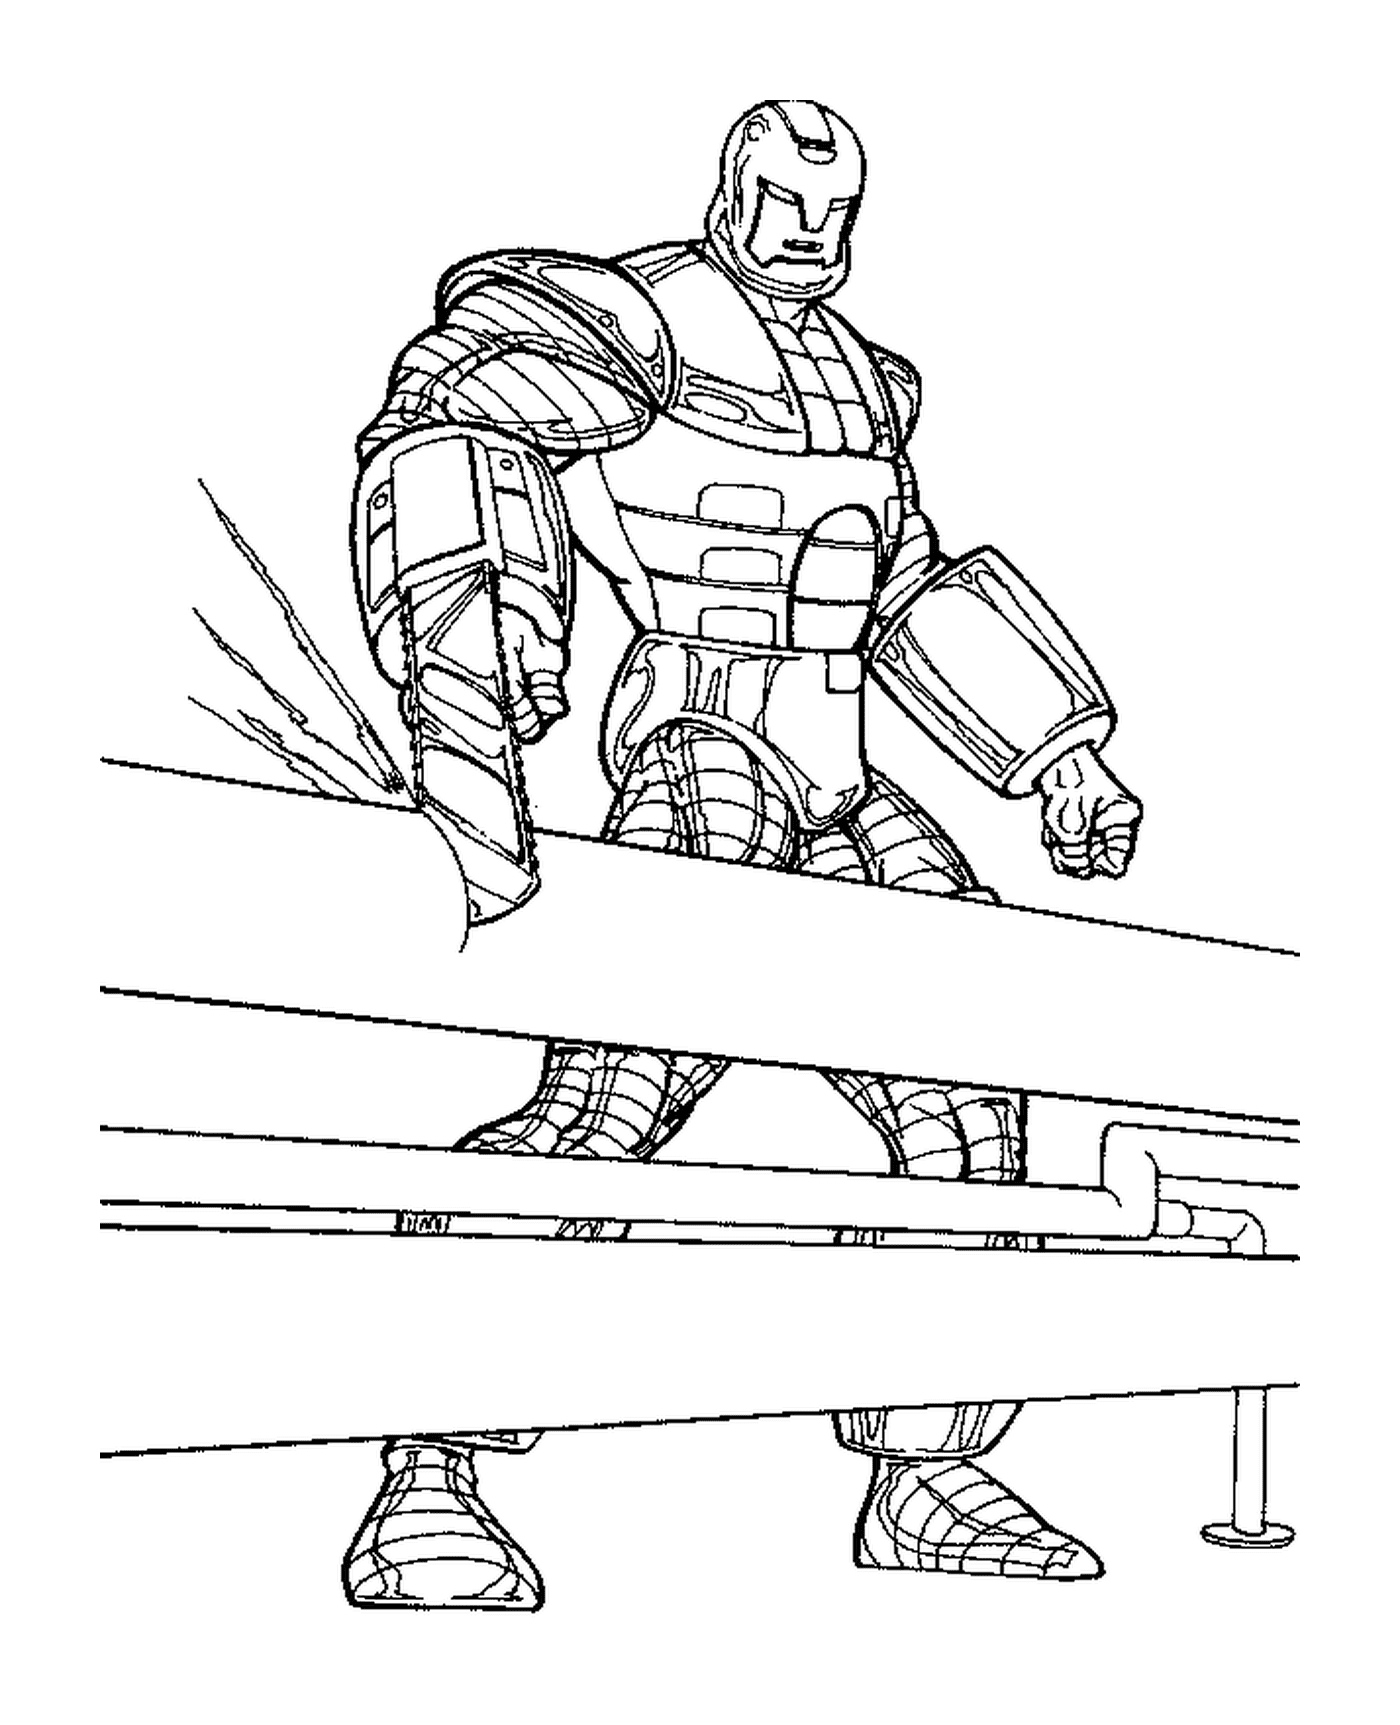  Iron Man standing on a ramp 